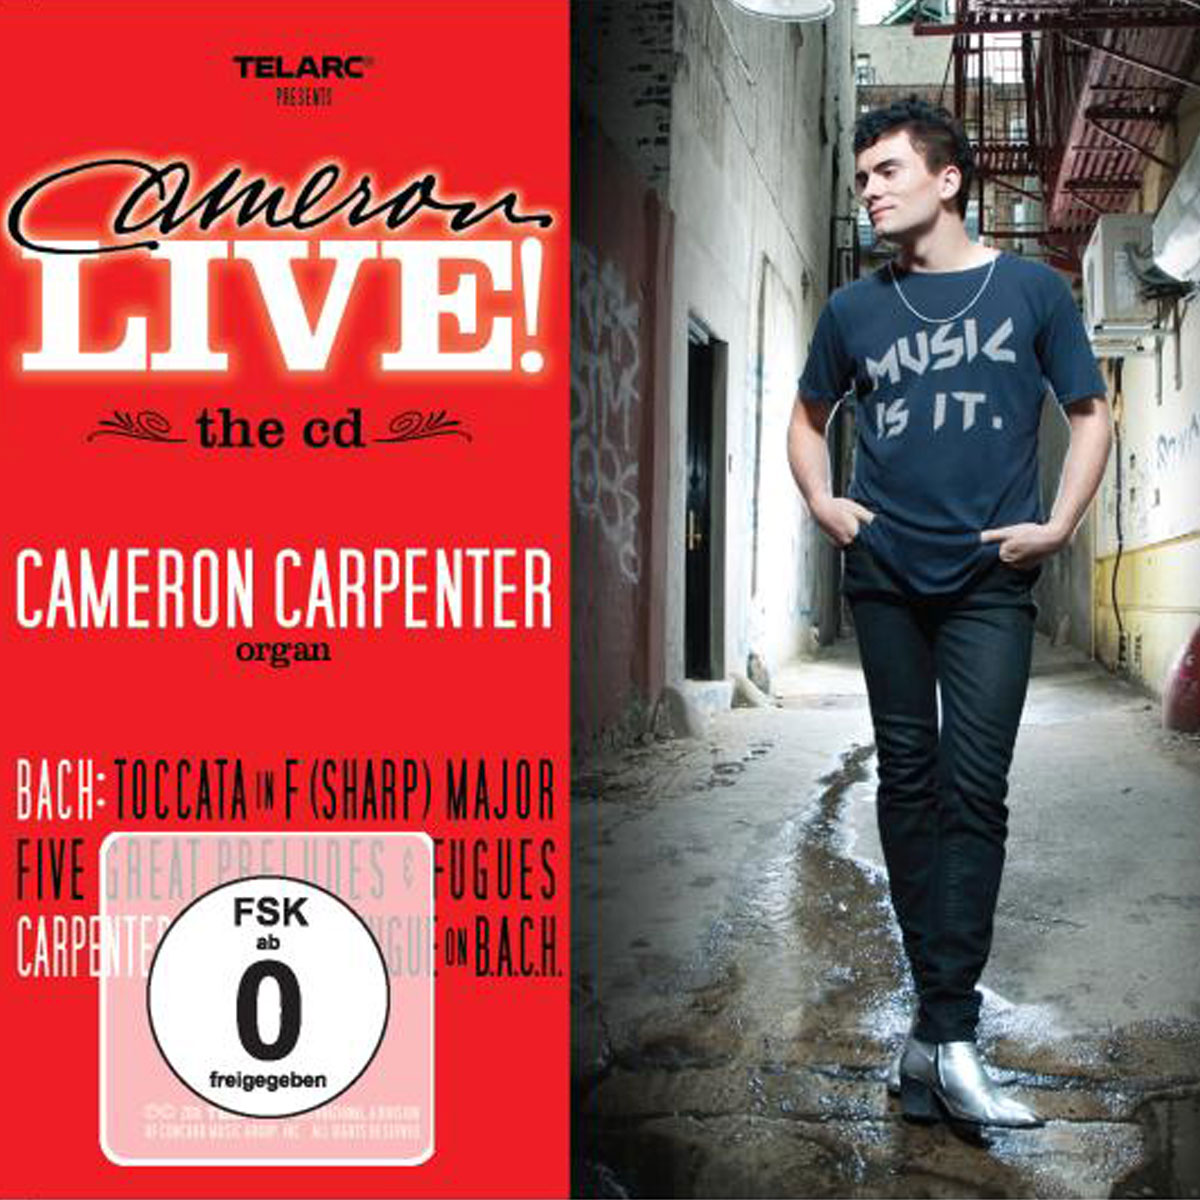 Cameron Live!